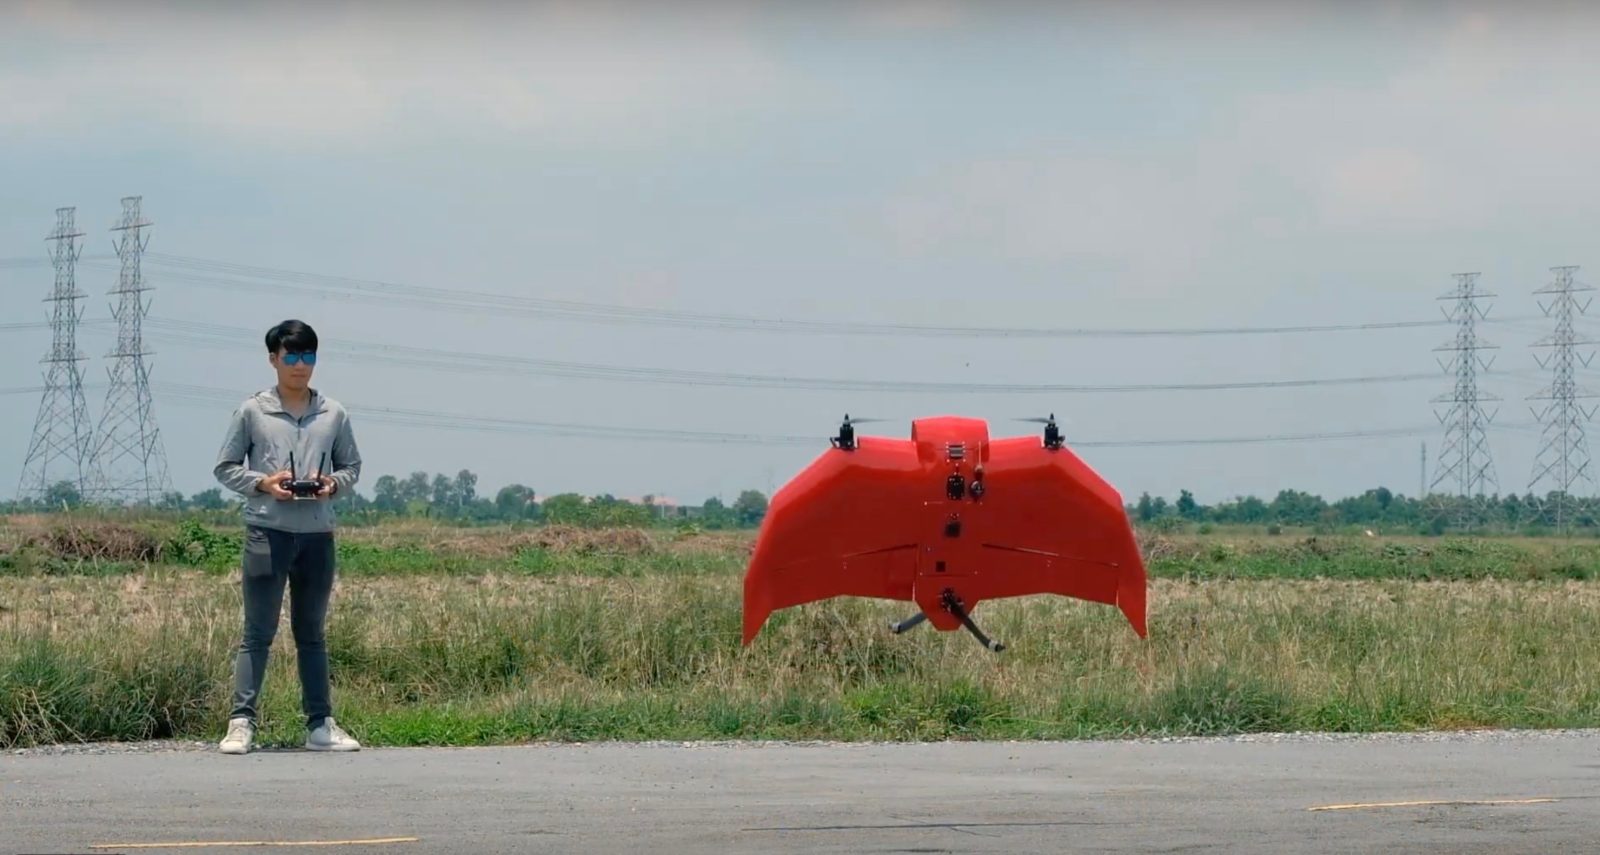 Vetal VTOL drone